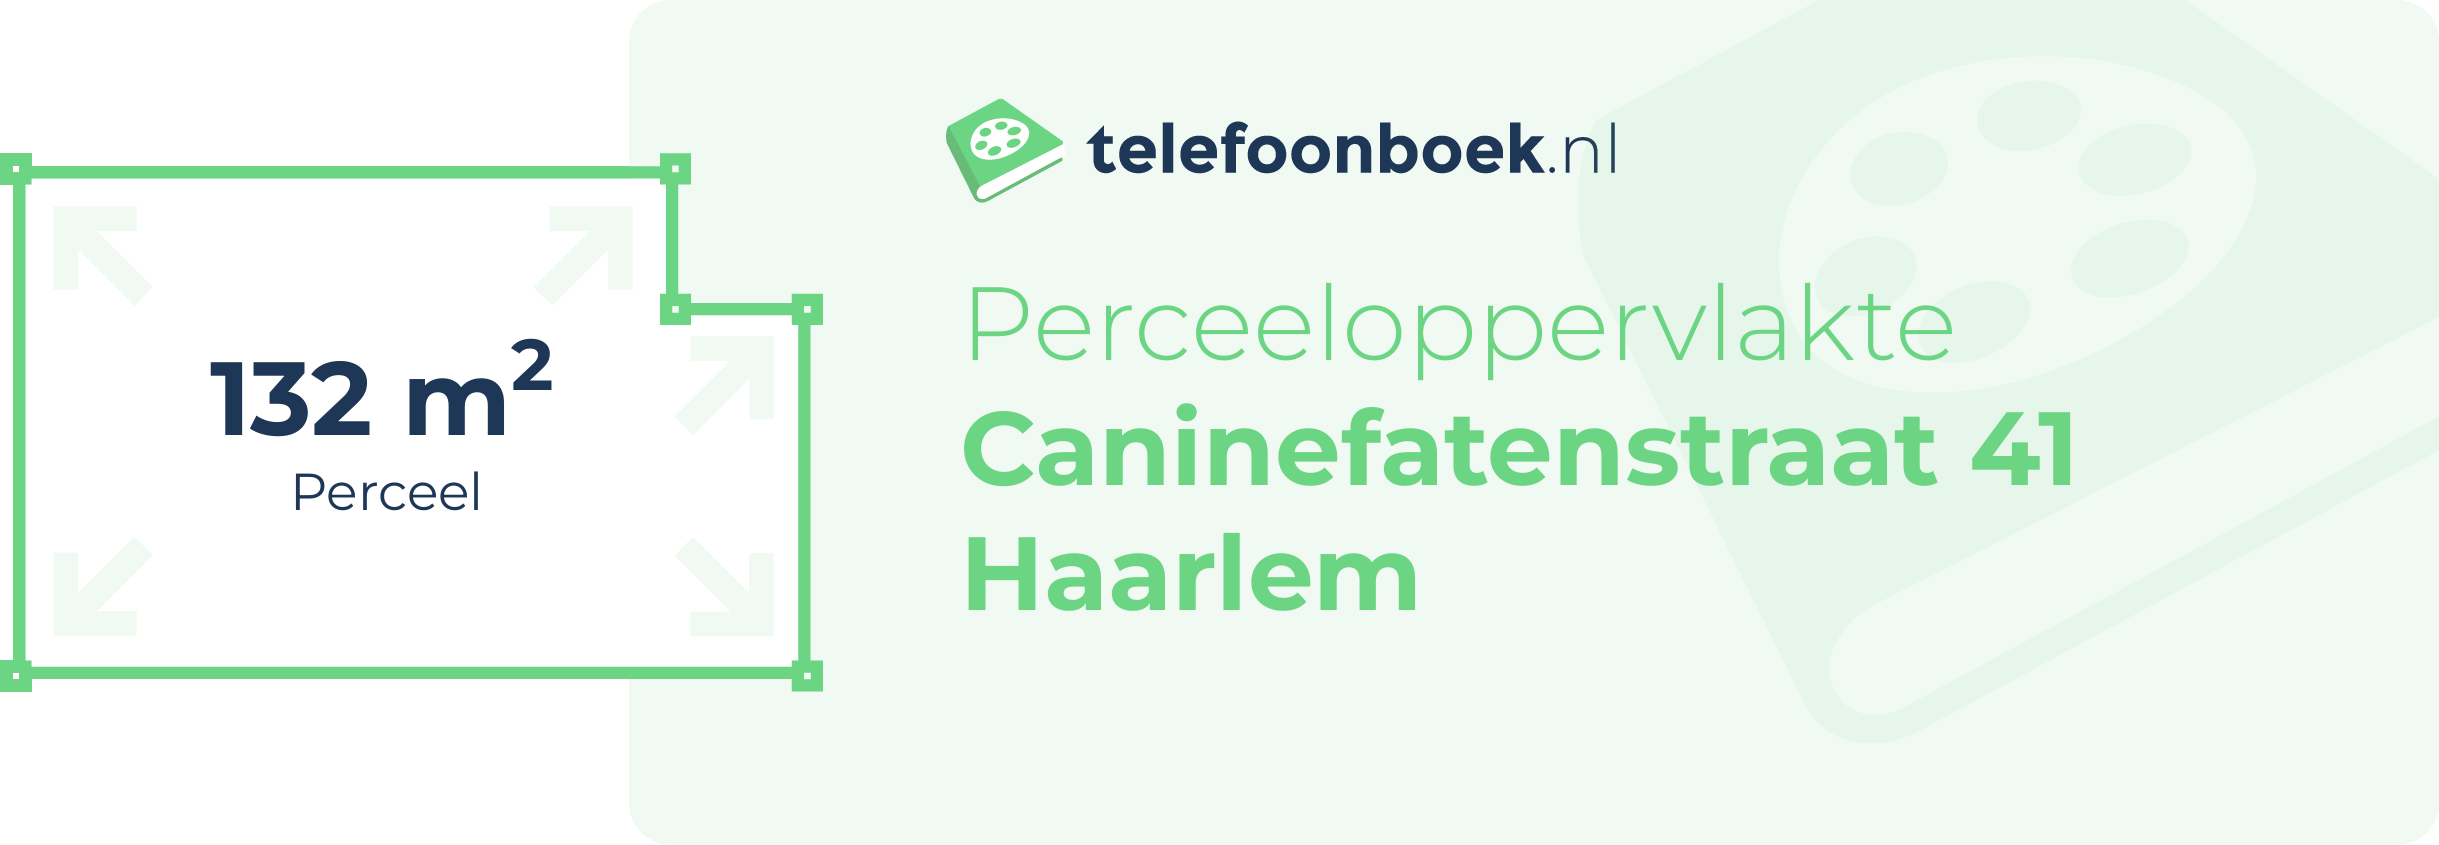 Perceeloppervlakte Caninefatenstraat 41 Haarlem